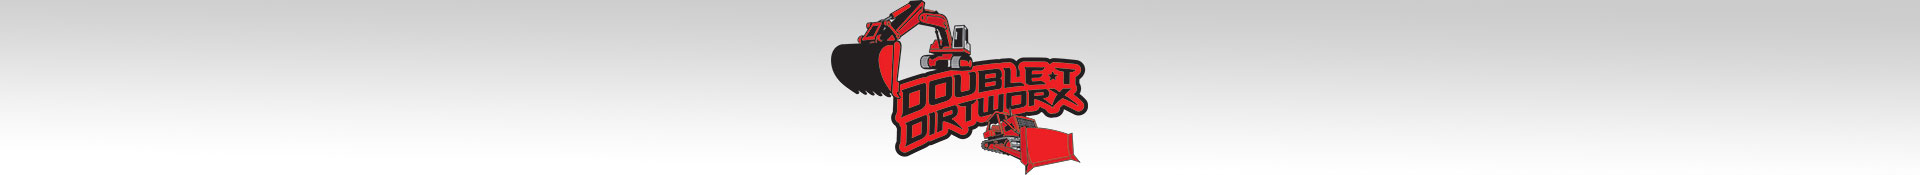 Double T Dirtworx